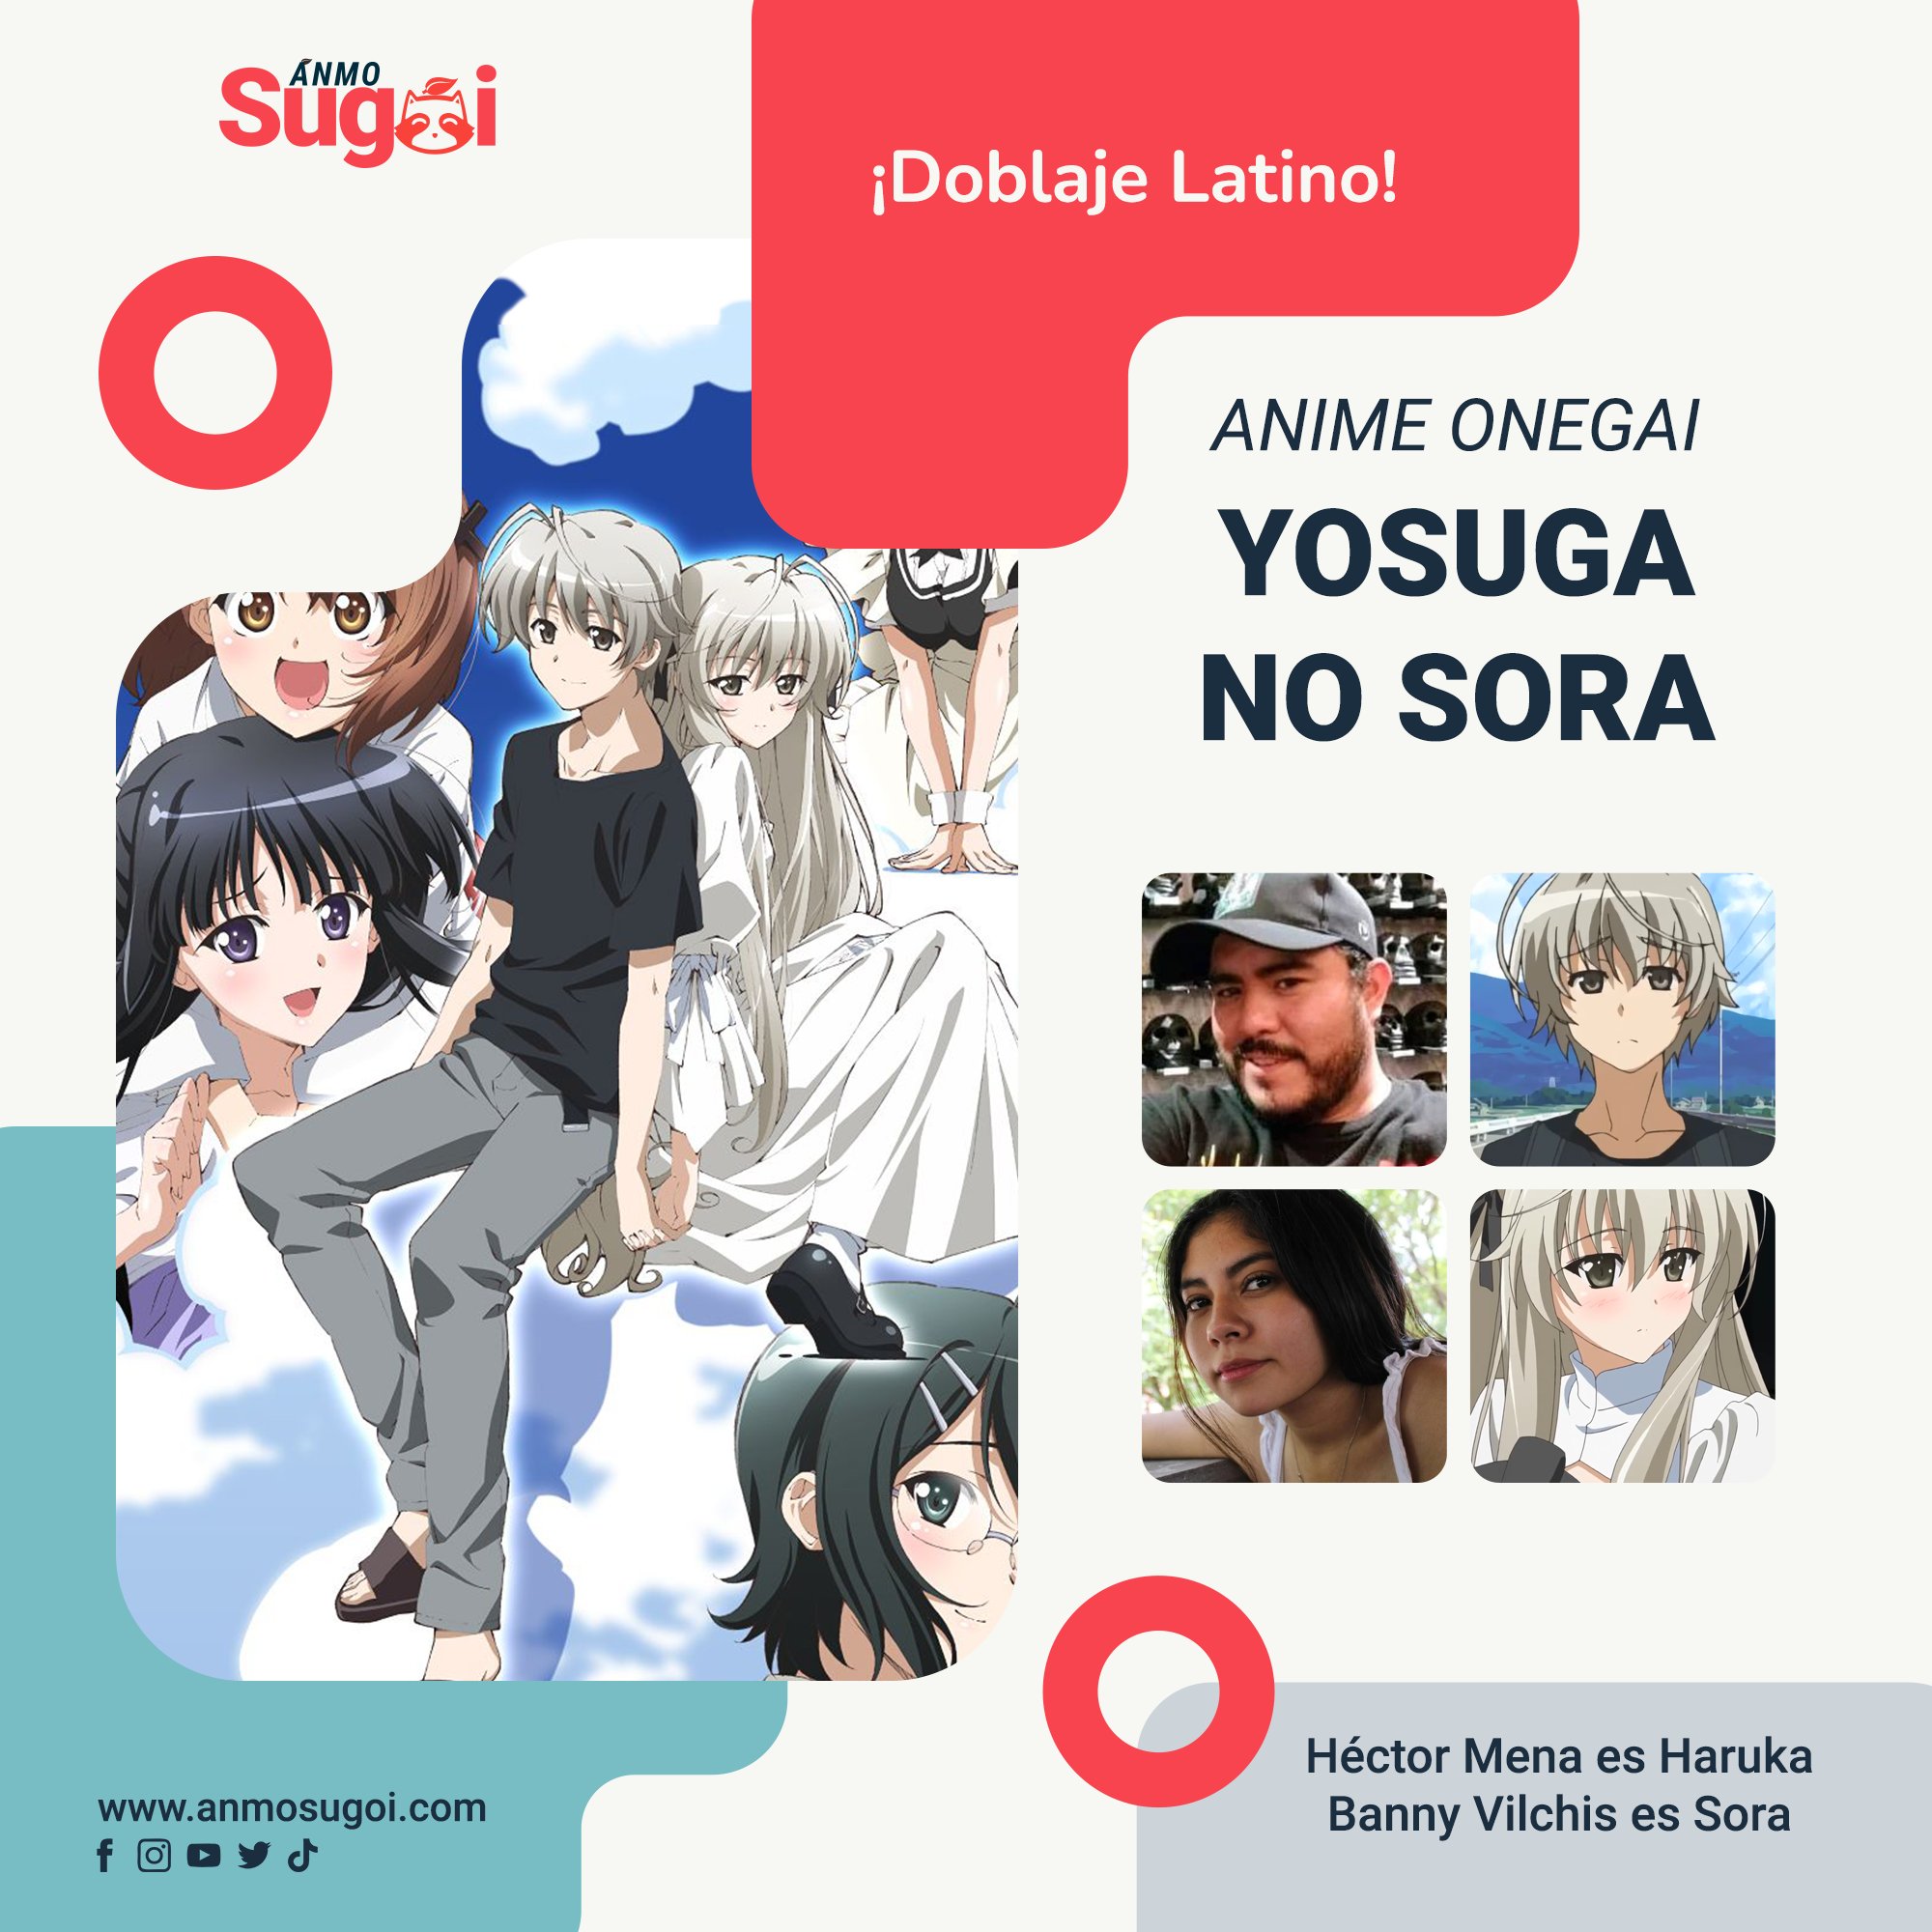 El doblaje de Yosuga no Sora por fin llega a Anime Onegai